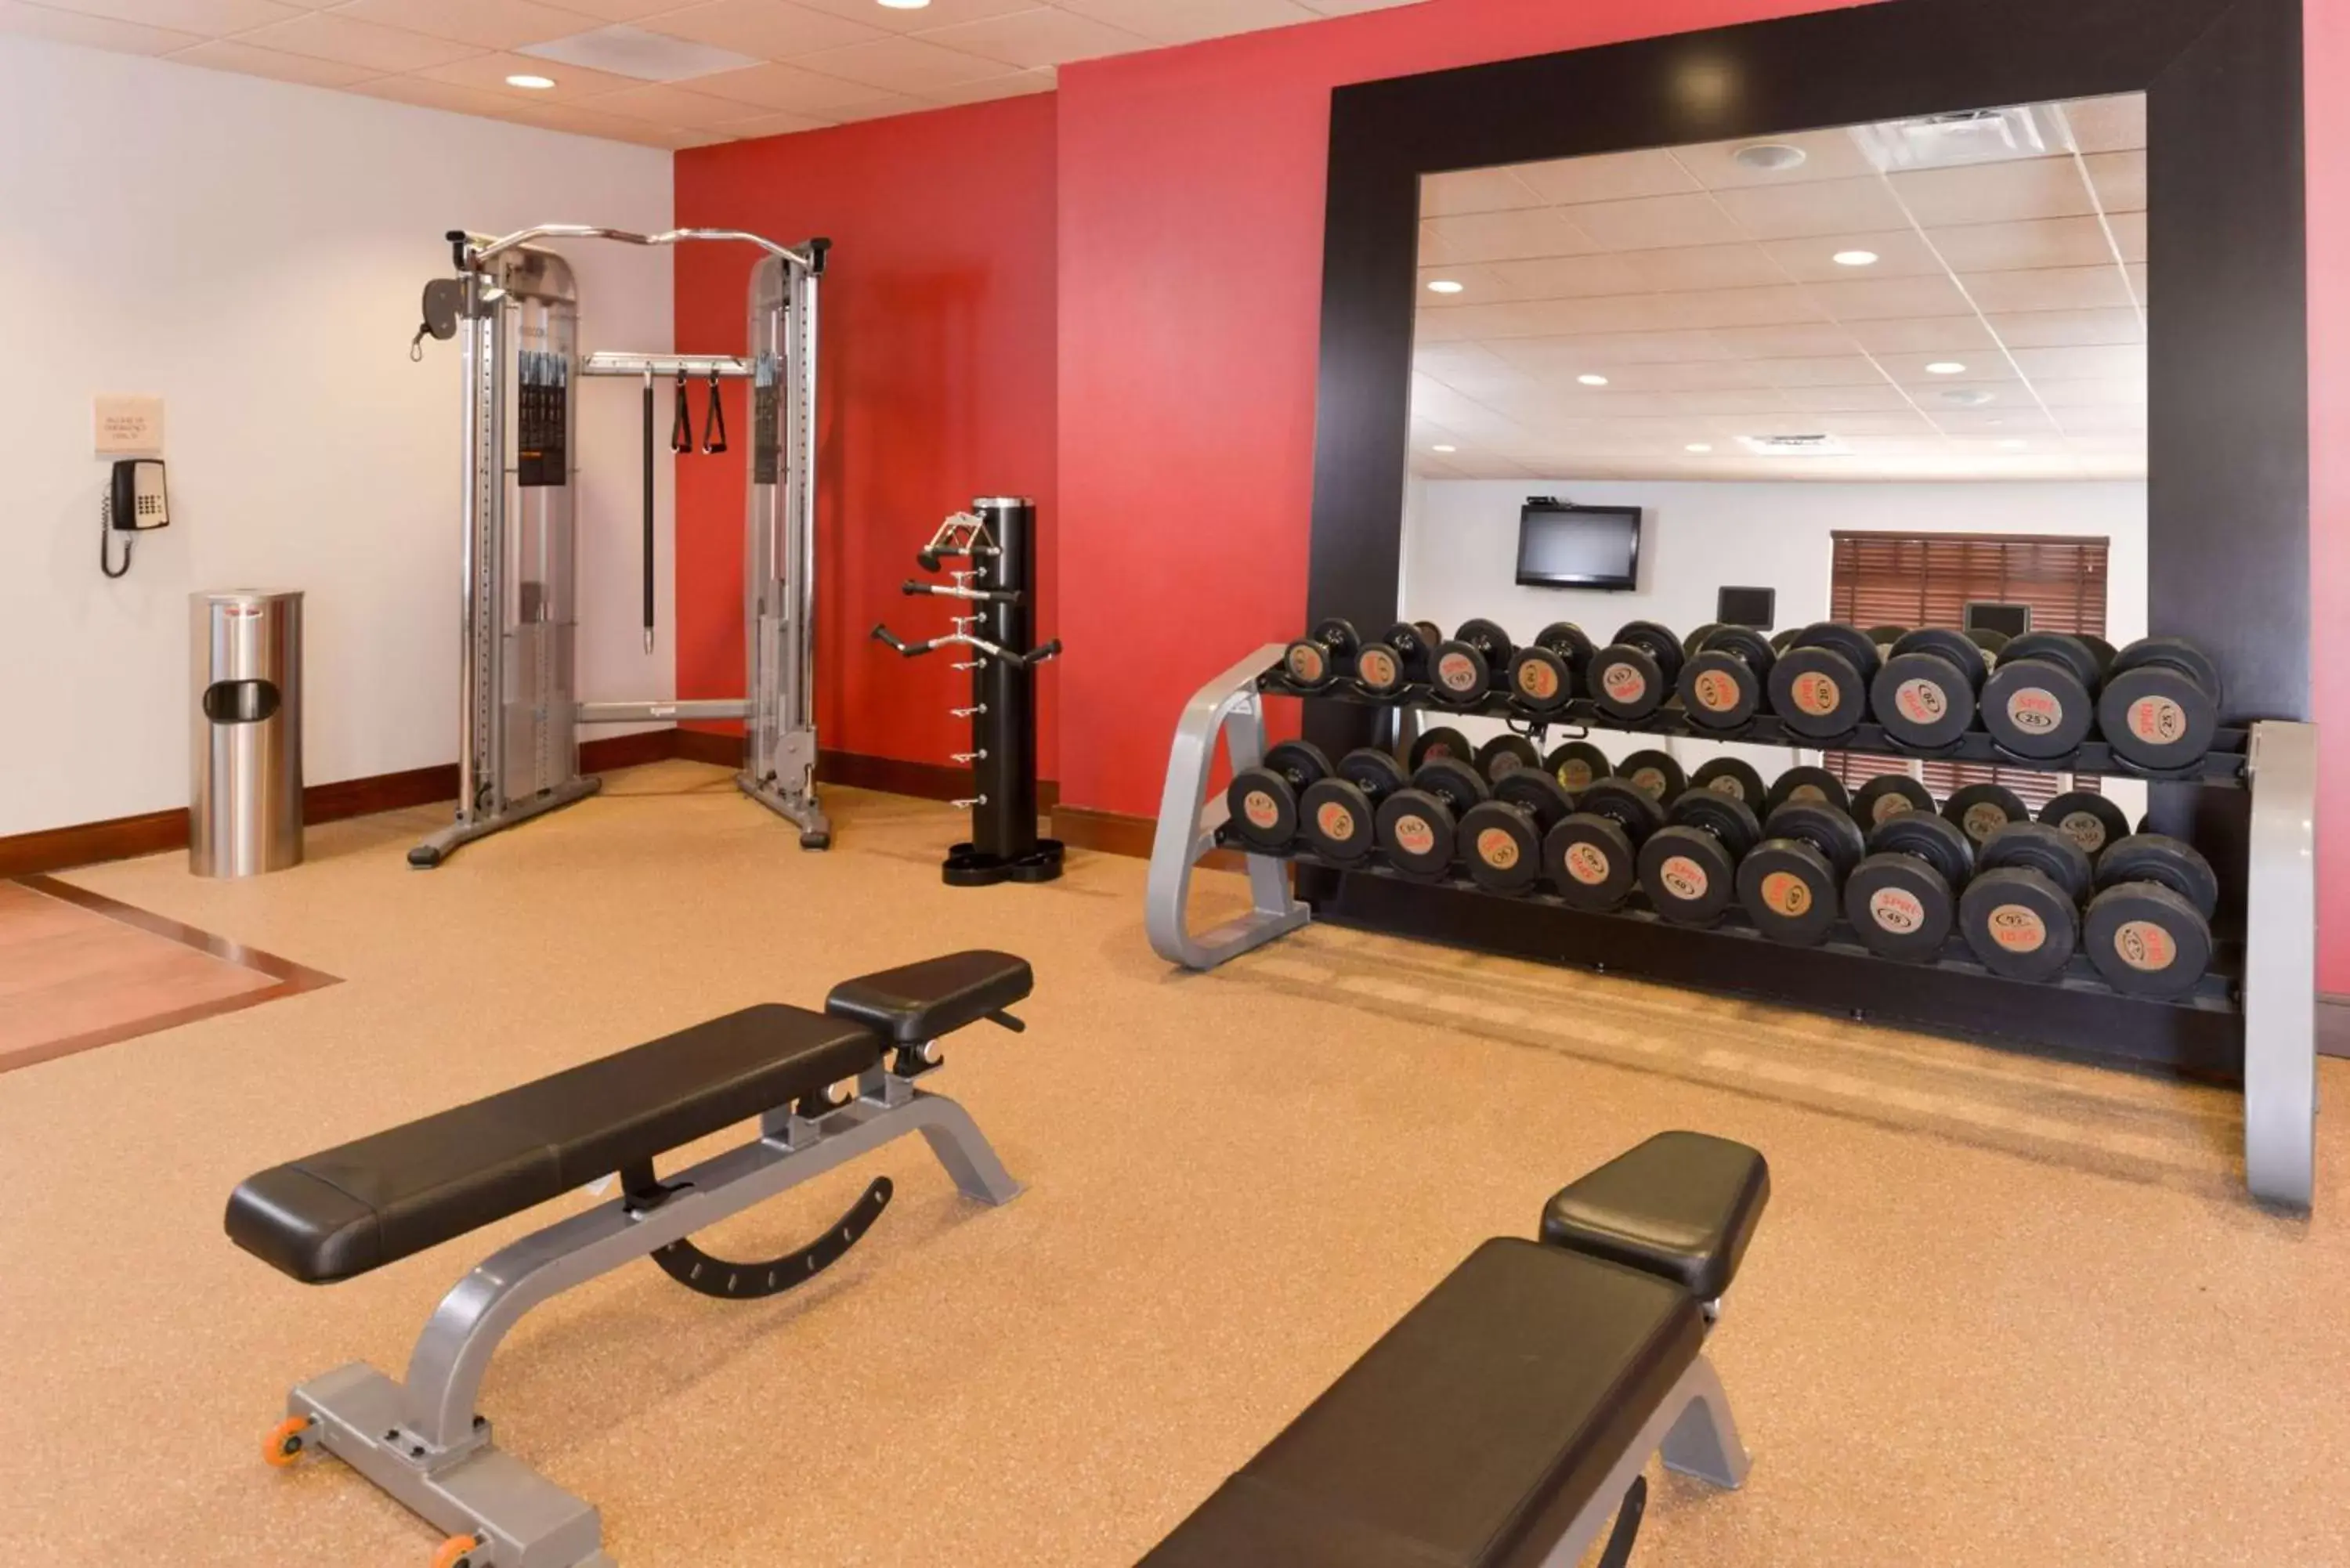 Fitness centre/facilities, Fitness Center/Facilities in Hilton Garden Inn Yuma Pivot Point